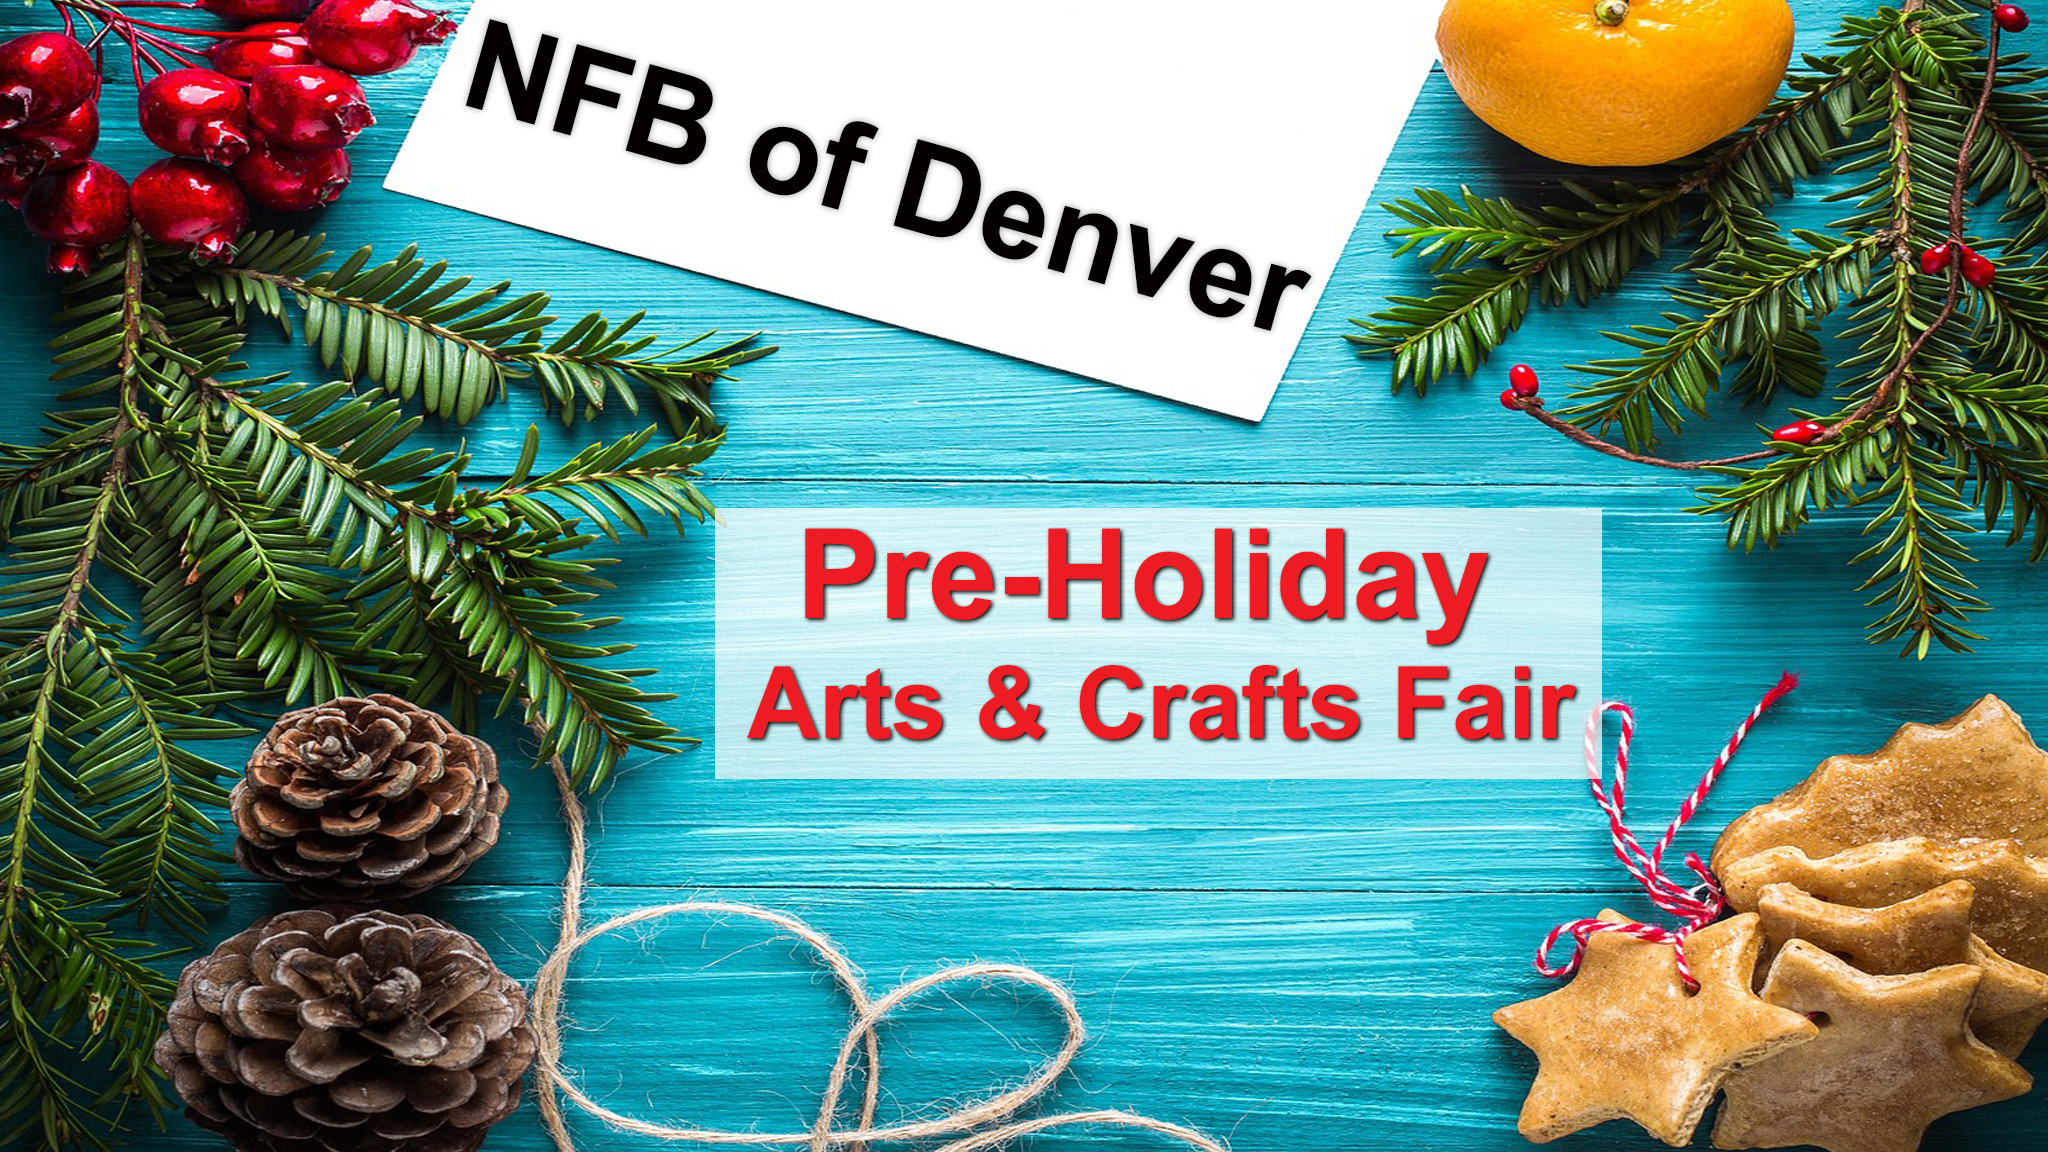 NFB of Denver Pre-Holiday Arts & Crafts Fair Image